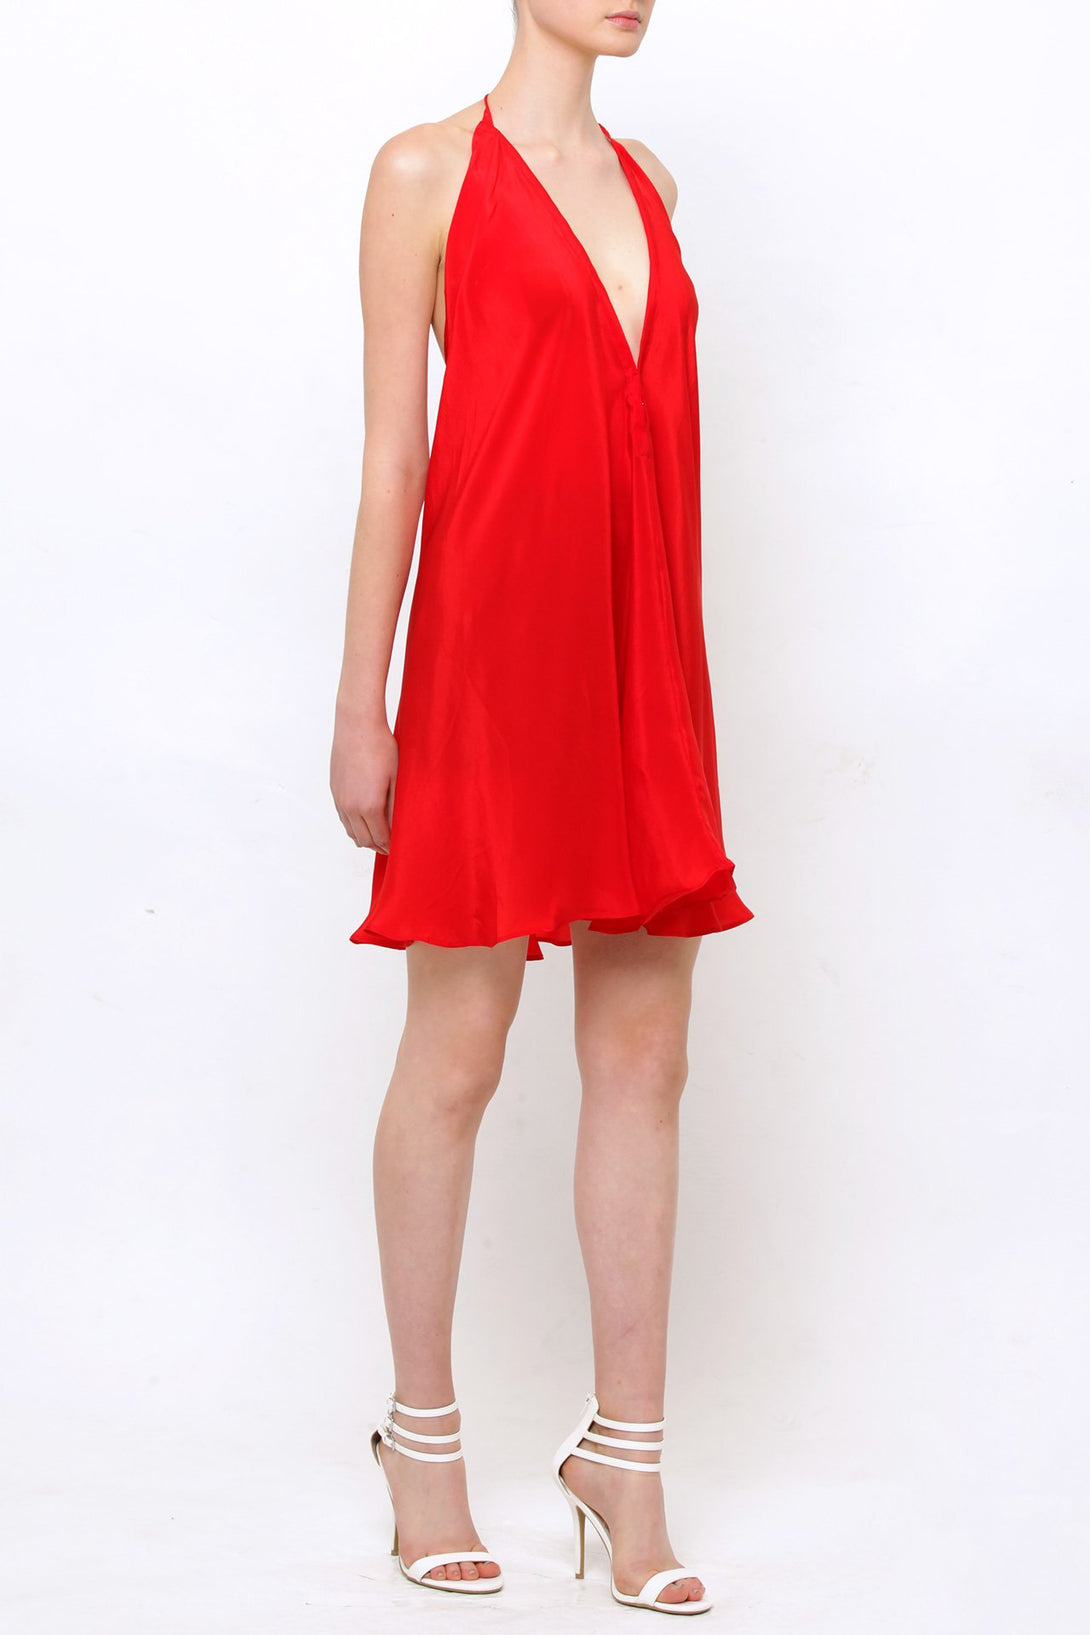  red satin dress mini, Shahida Parides, cute mini dresses, short sleeveless summer dresses,